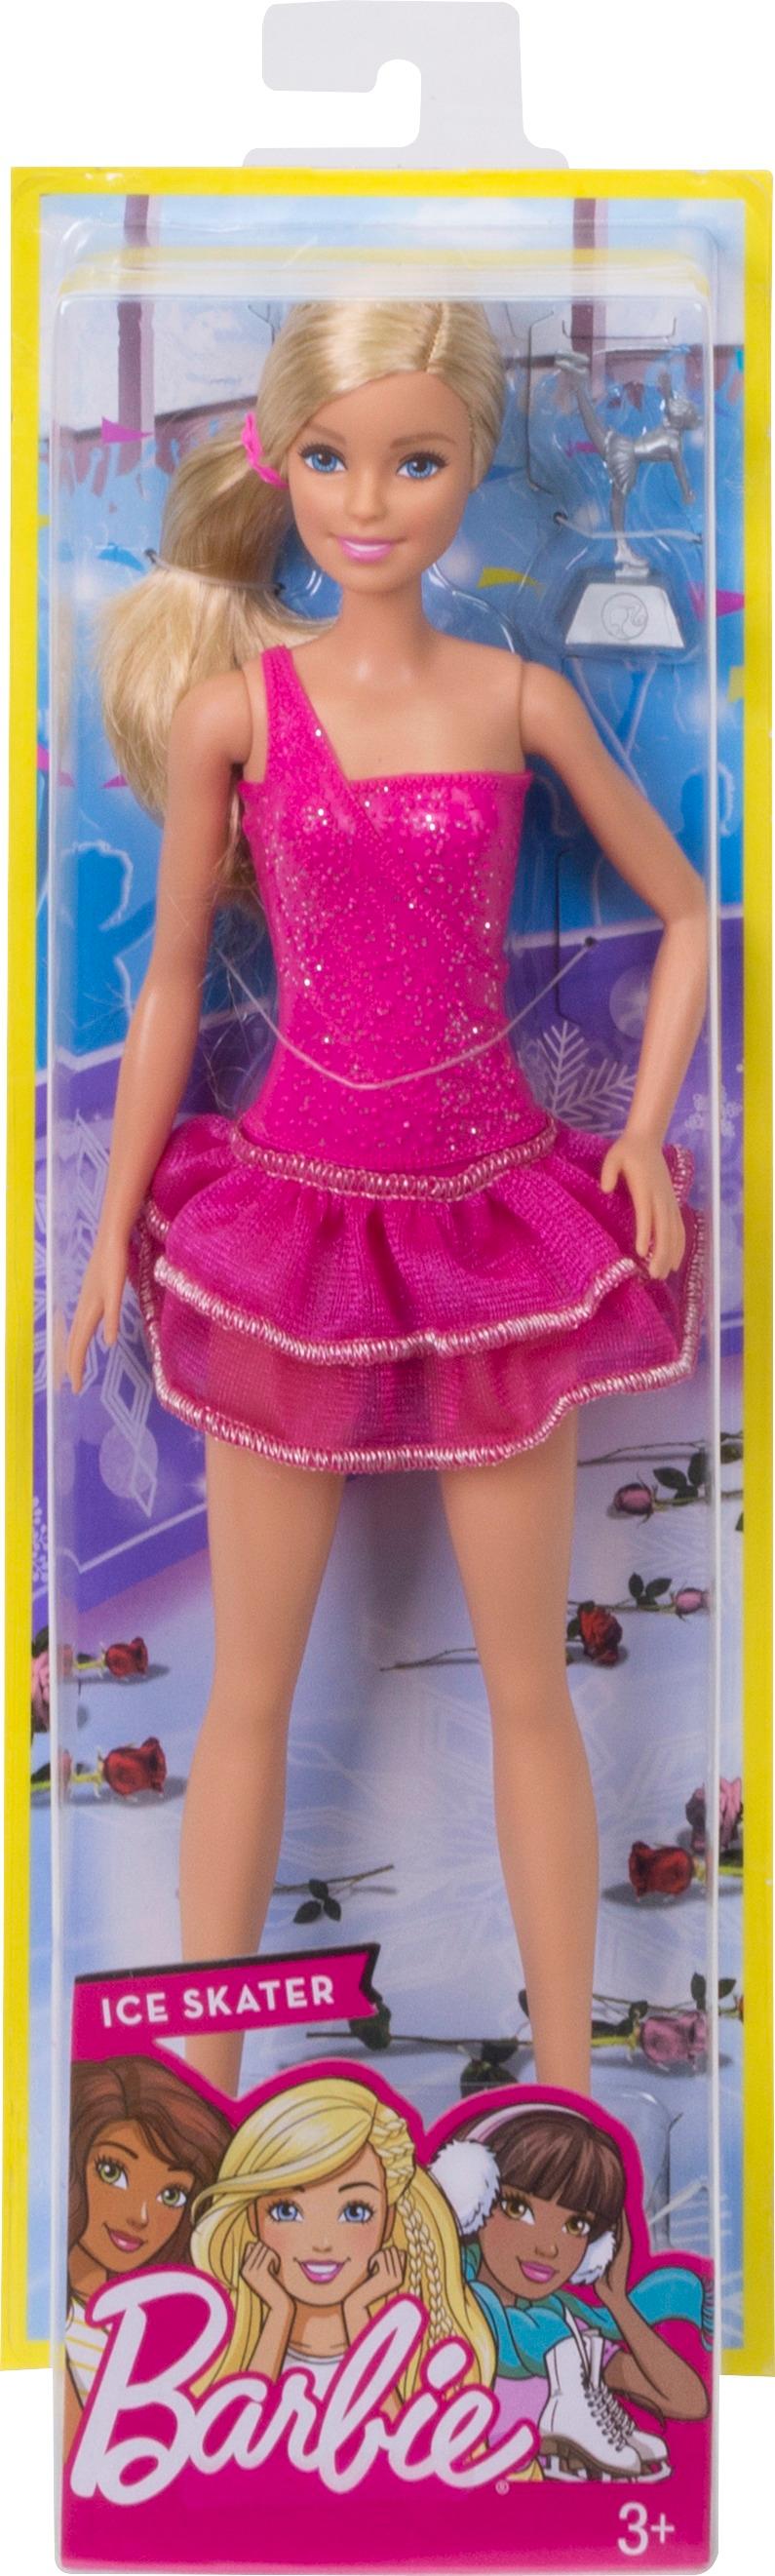 Mattel - Barbie Career Doll - Styles May Vary